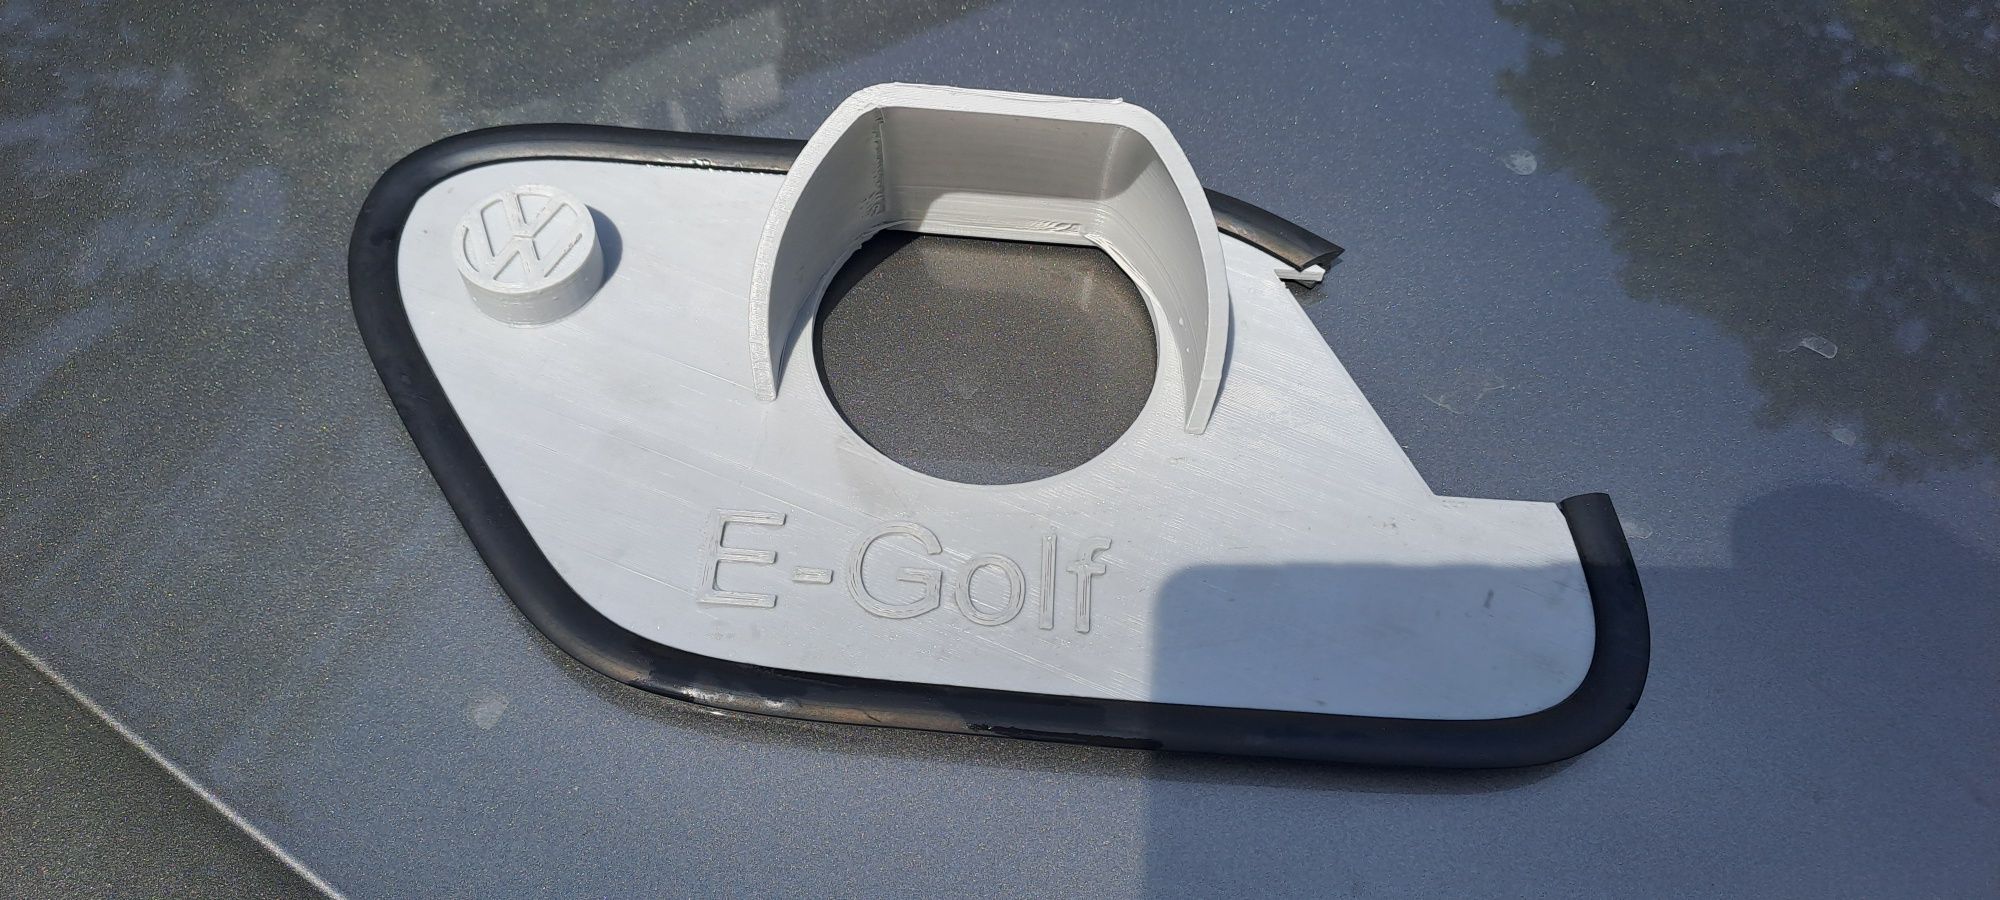 Додатковий захист лючка зарядки Е гольф e-golf